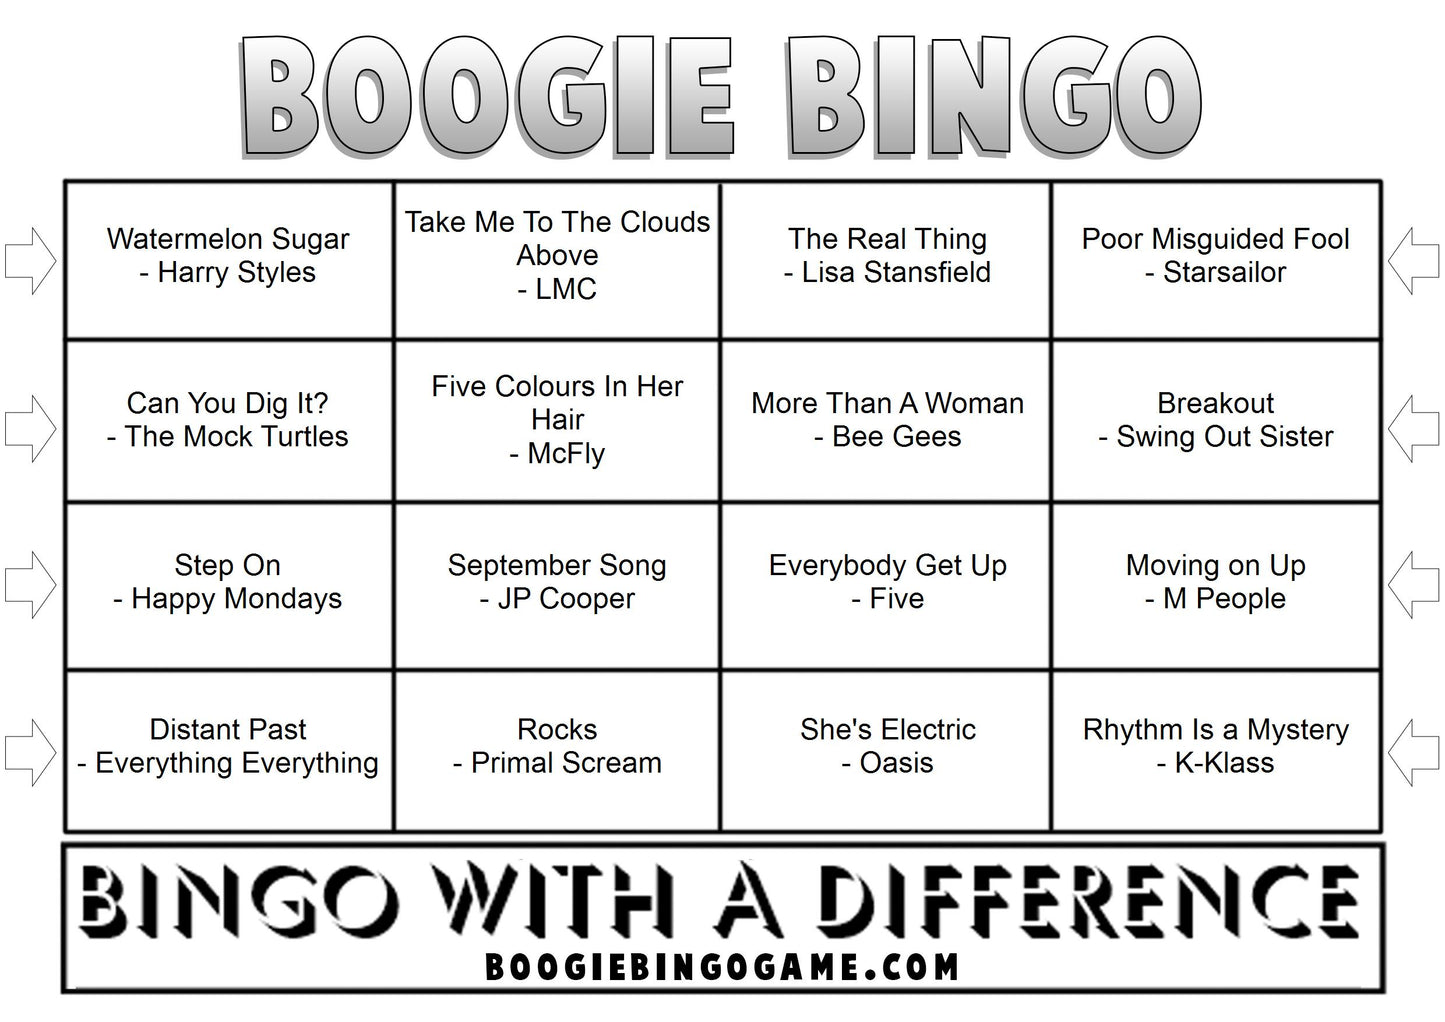 Game 110 | Mad For It | Boogie Bingo | Printable Music Bingo Tickets